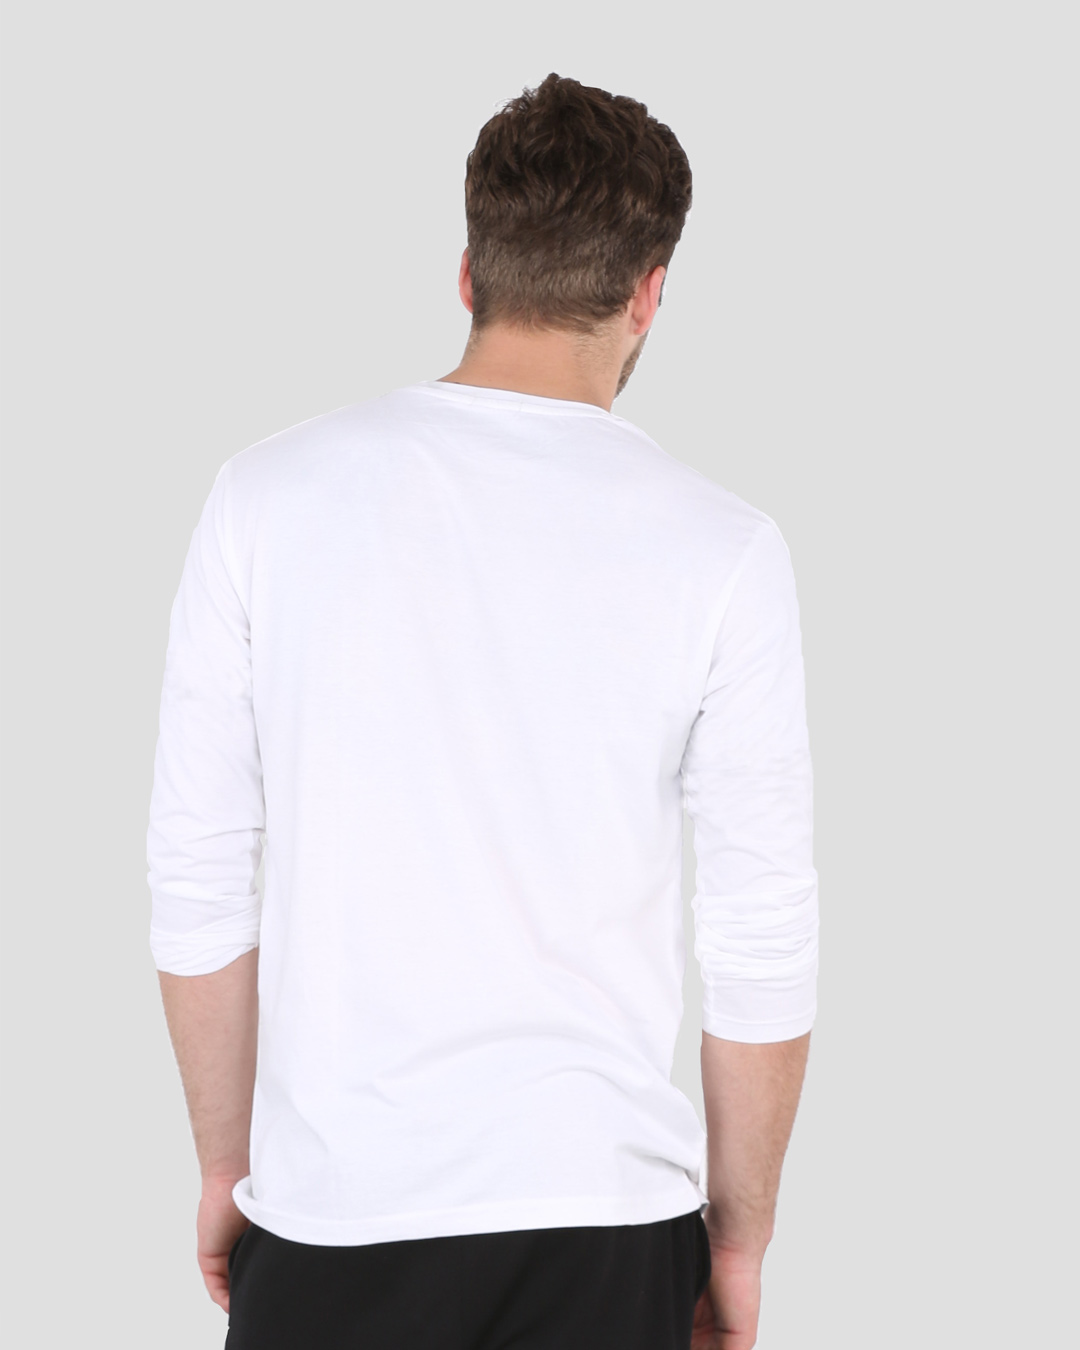 Shop Cricket Is Life Full Sleeve T-Shirt White-Back